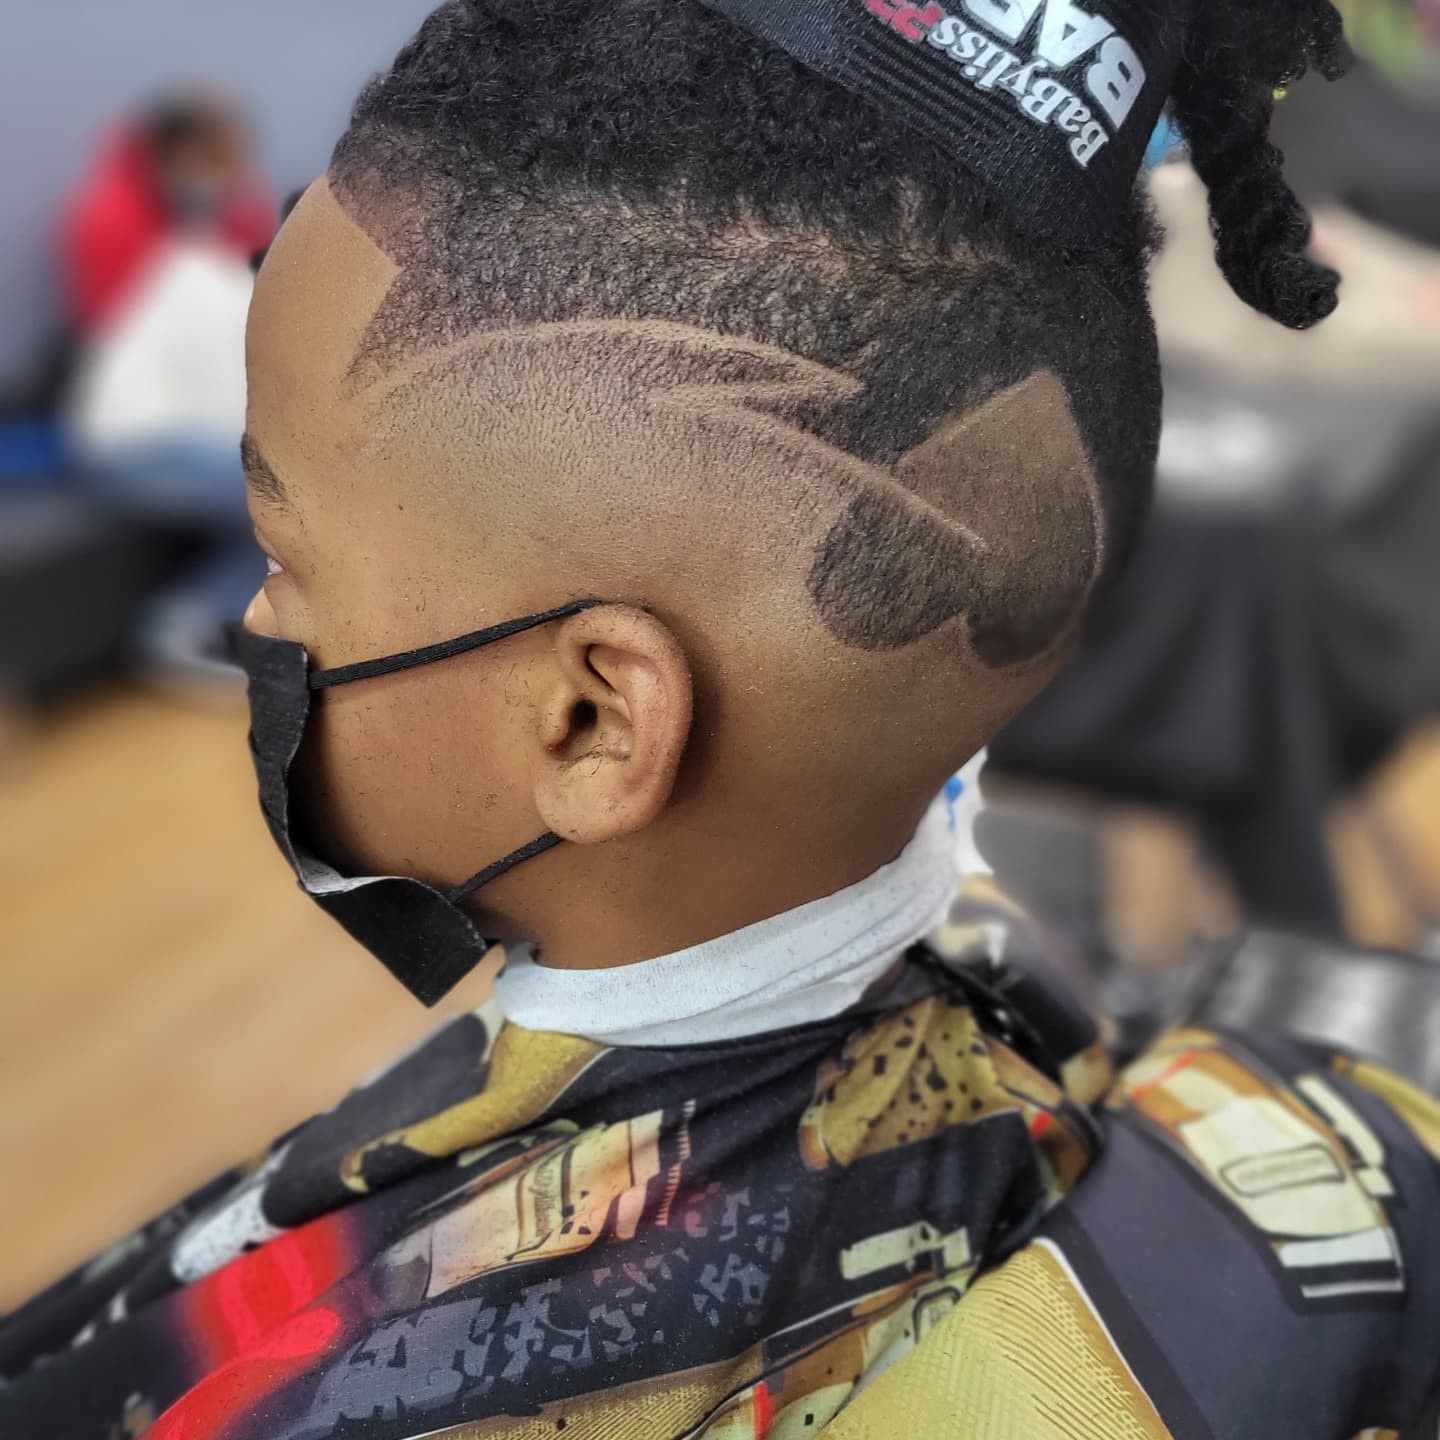 Style’s kid haircuts with design (0-12) portfolio